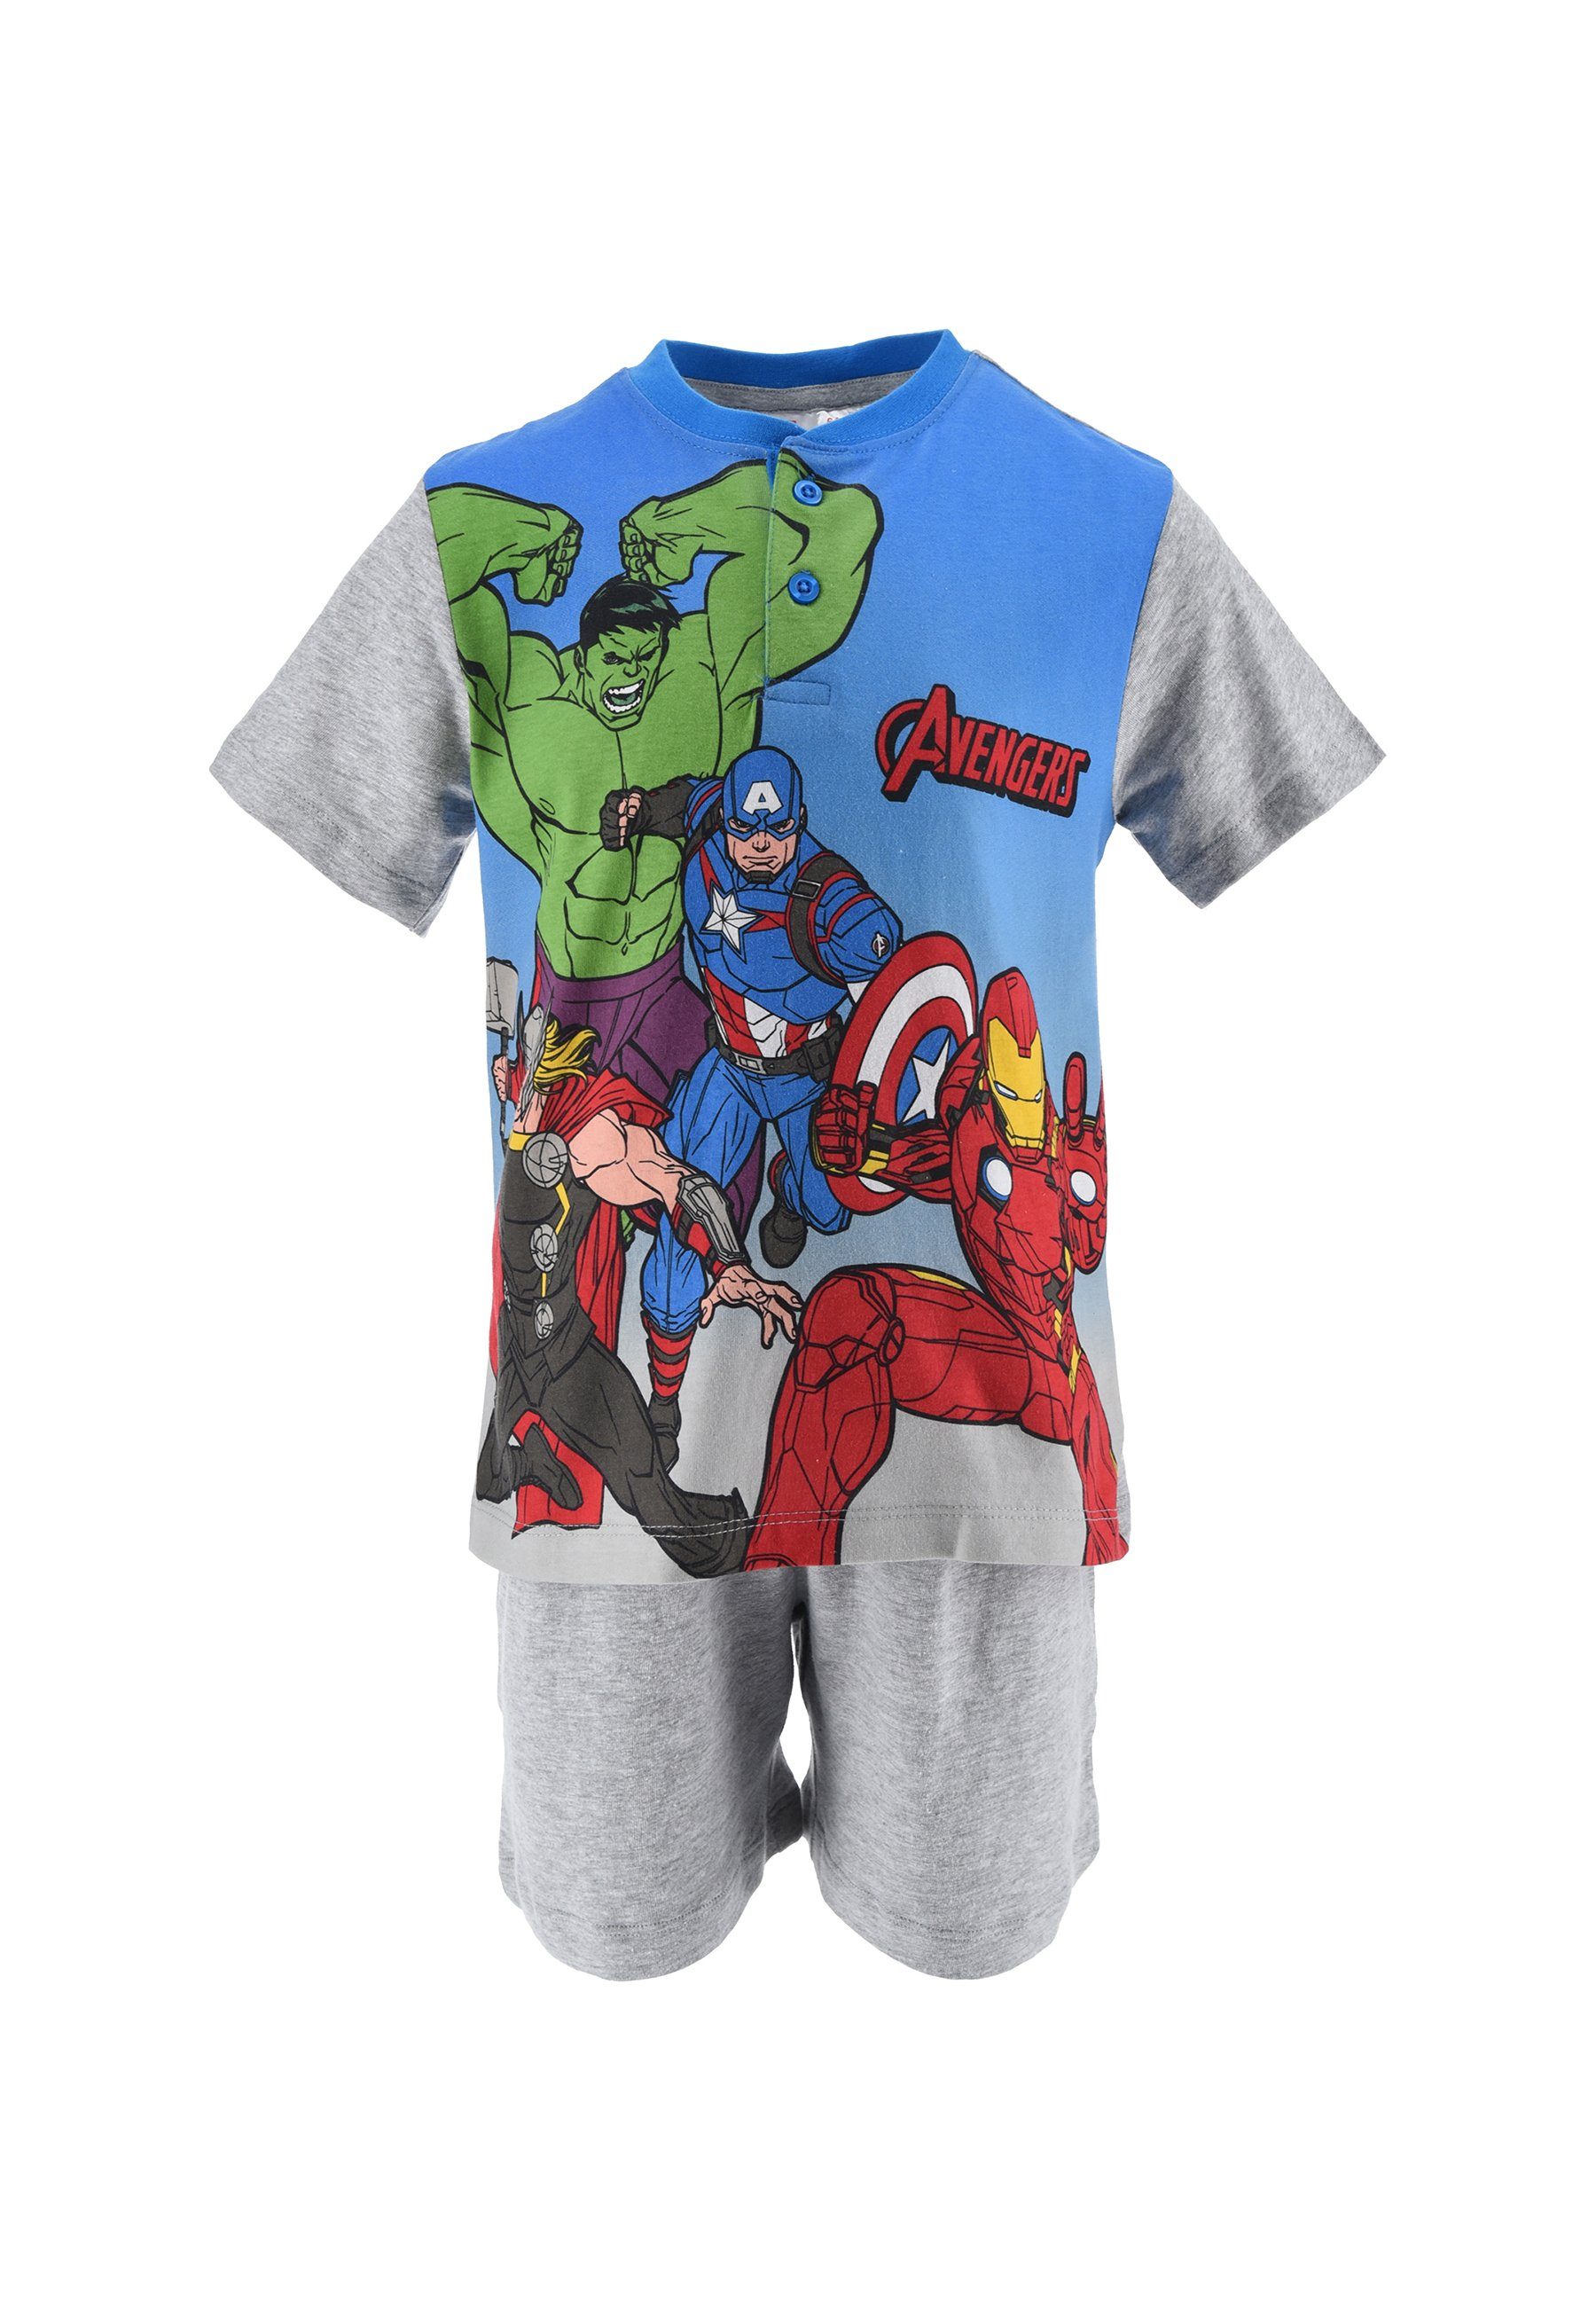 Shorty The Thor Pyjama Man Schlaf-Set Grau Hulk Iron Kinder Jungen (2 tlg) AVENGERS